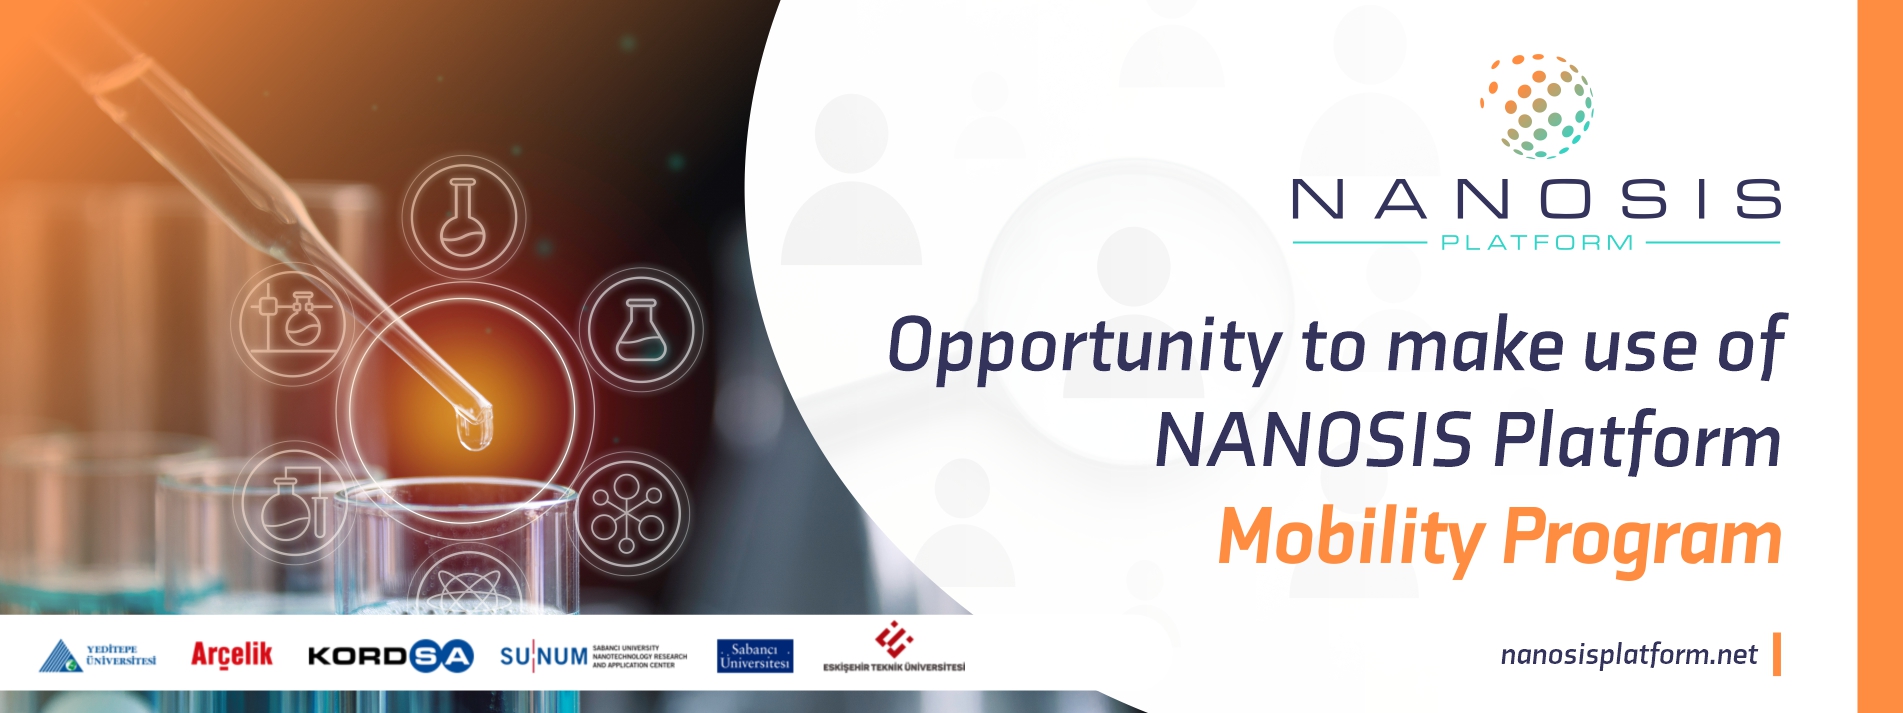 Opportunity to make use of NANOSIS Platform Mobility Program